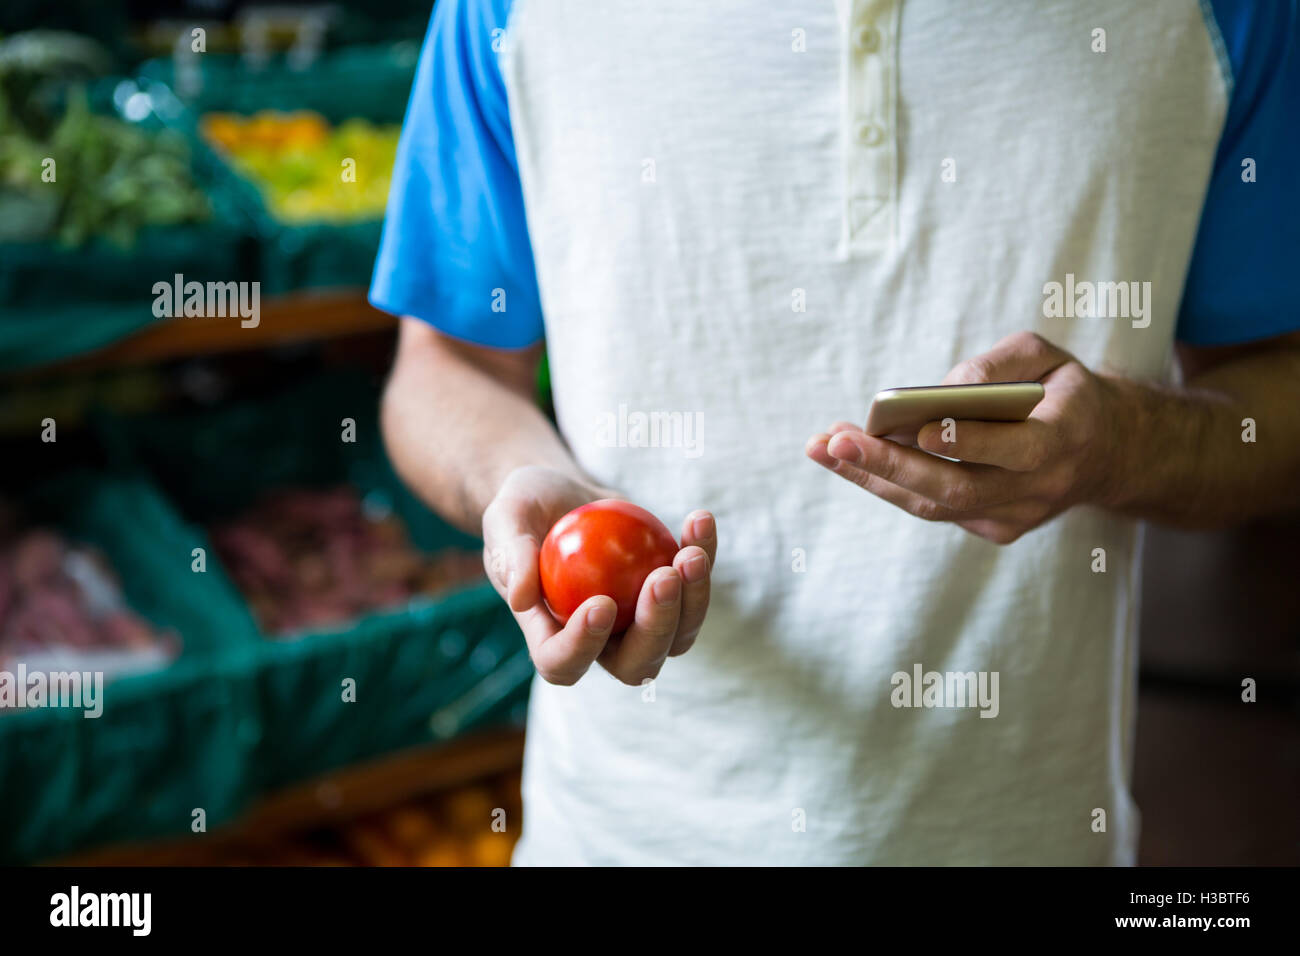 Man holding tomato and using phone Stock Photo